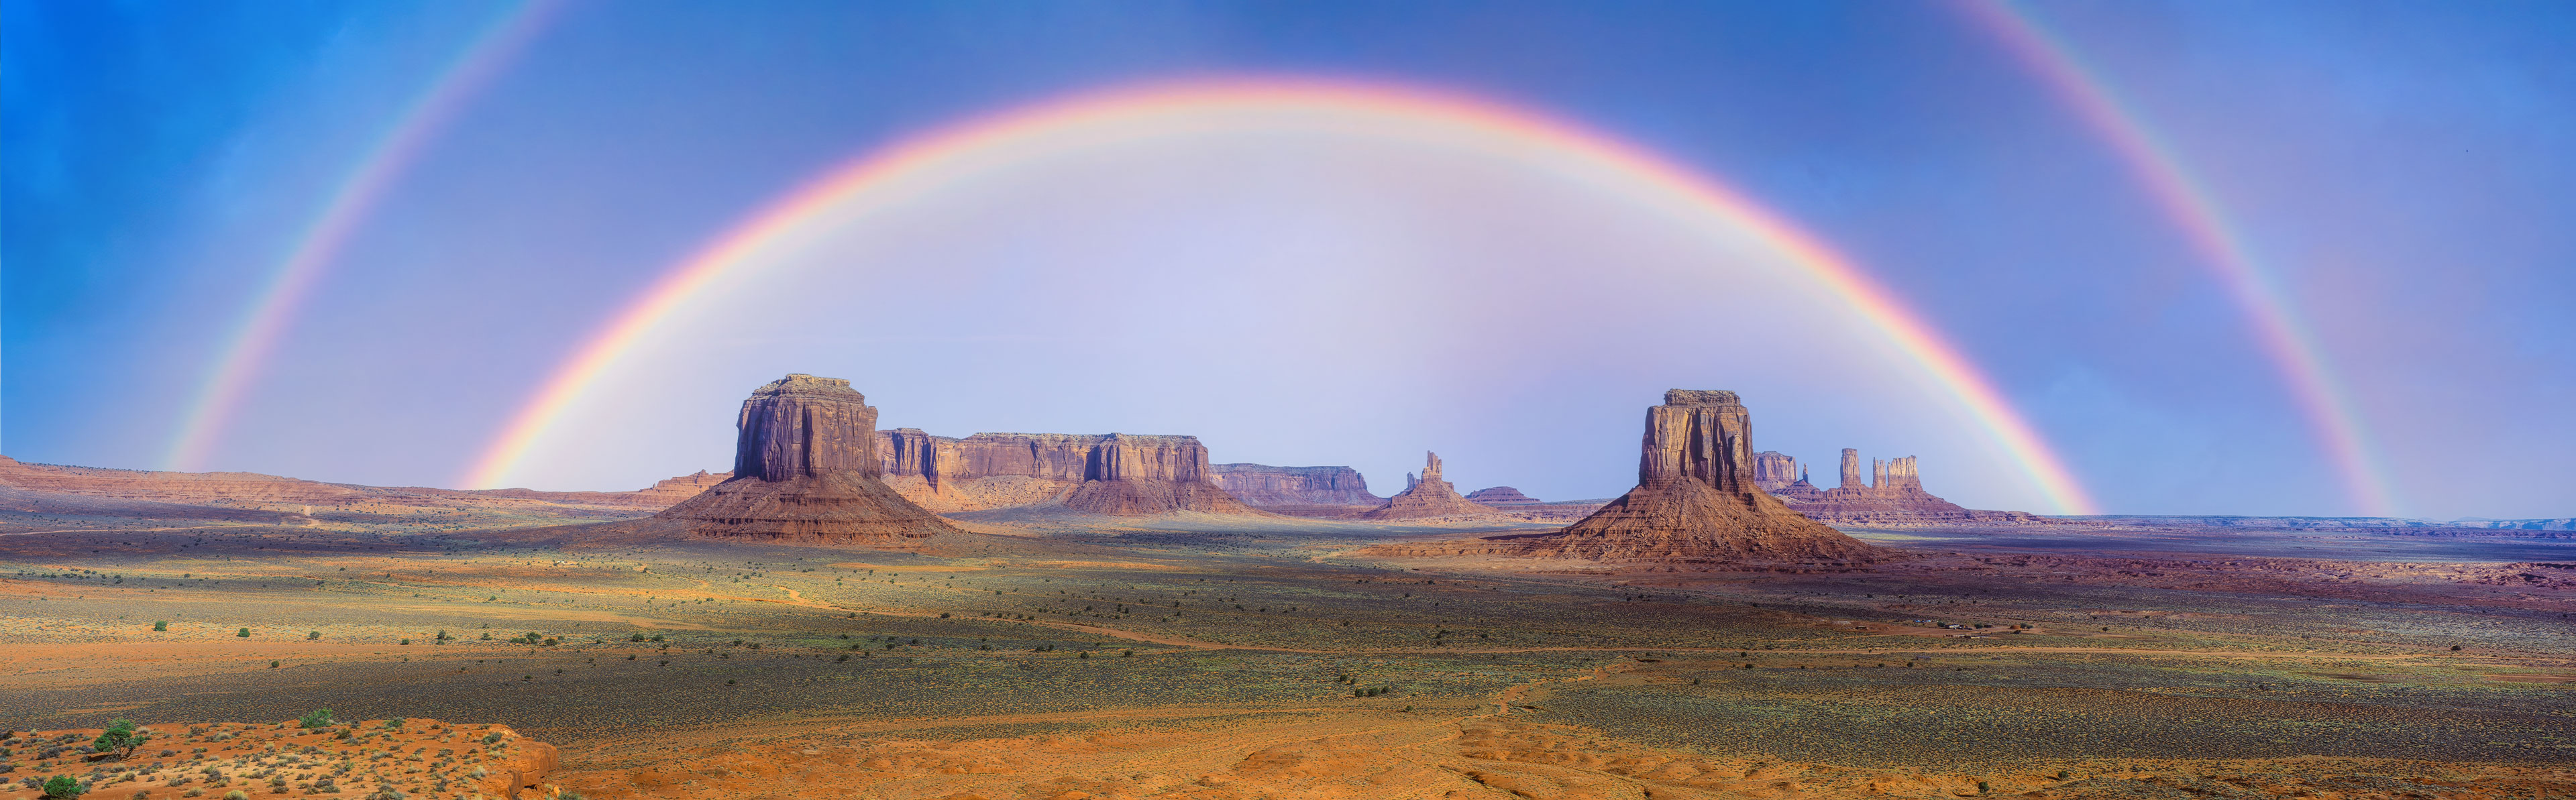 Monument Valley Navajo Tribal Park, Utah, USA (13554_rbow2)